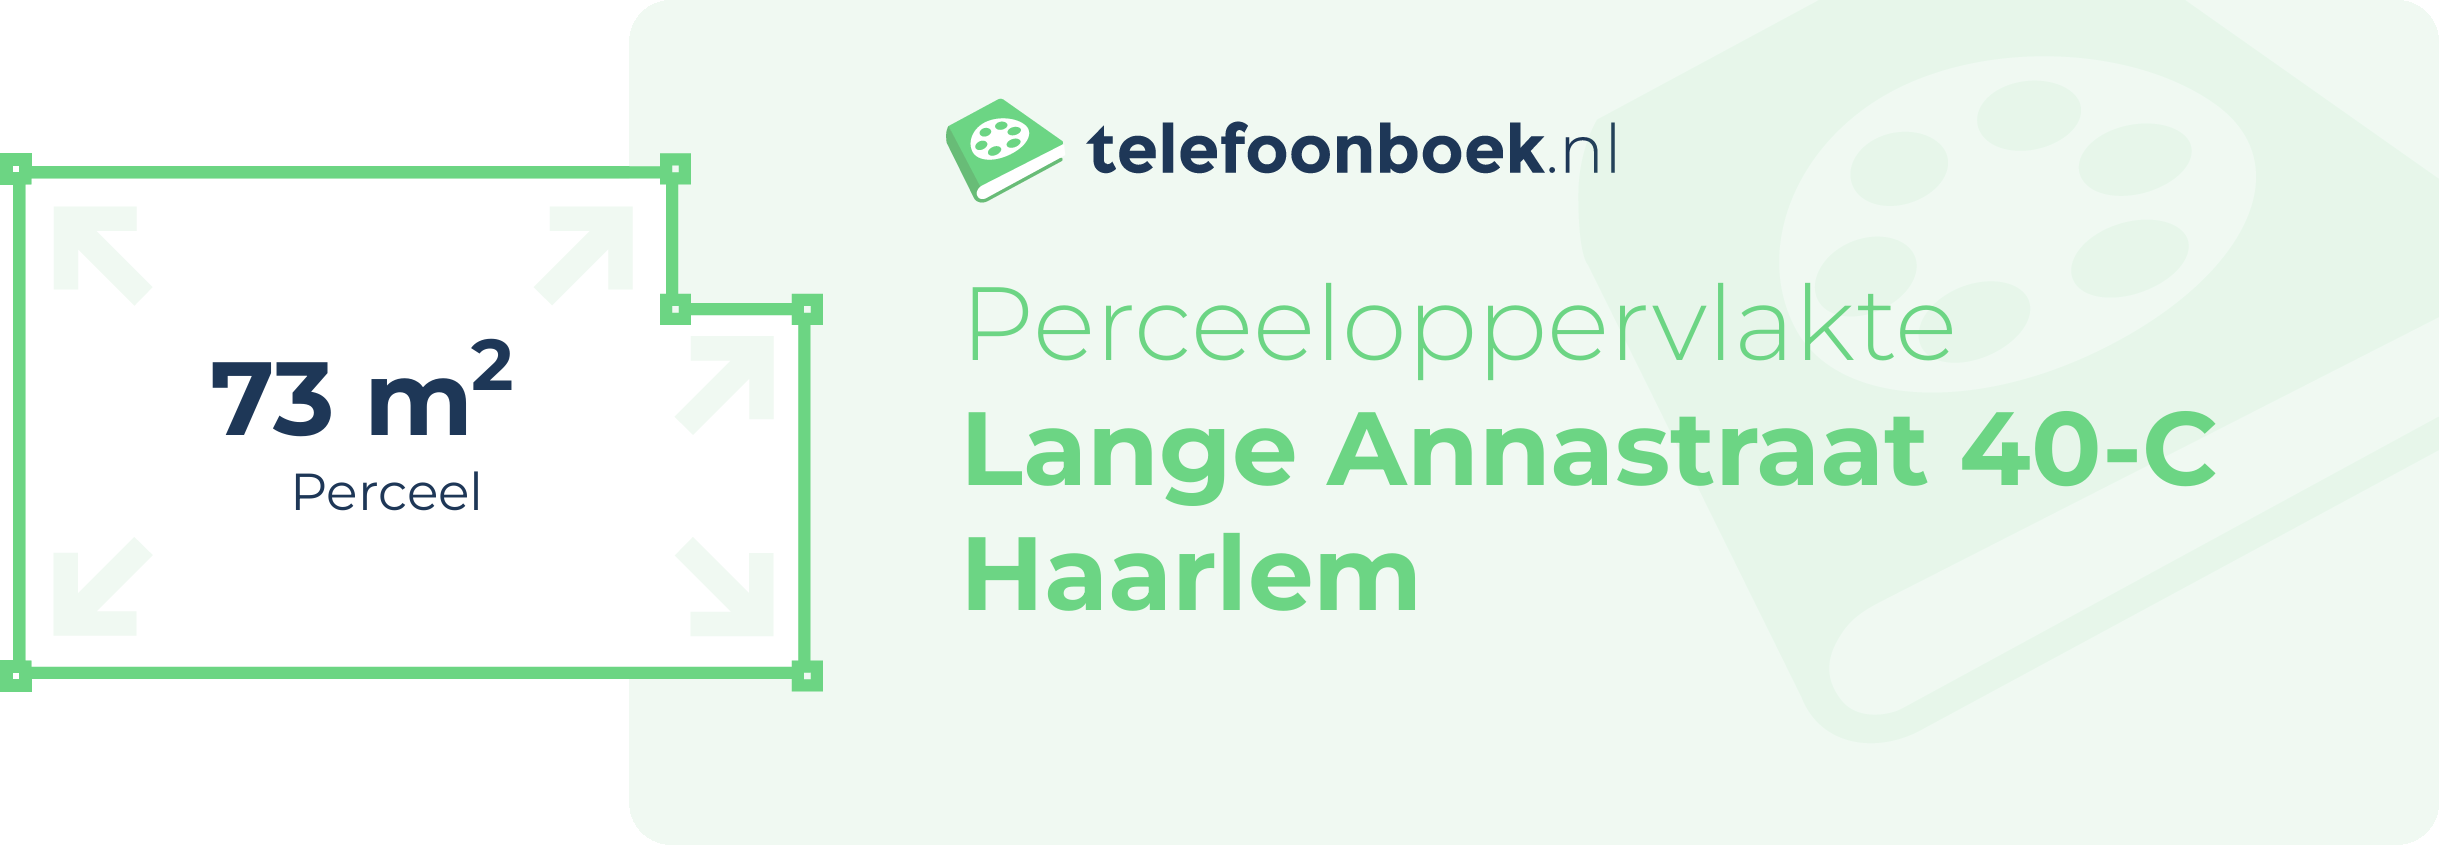 Perceeloppervlakte Lange Annastraat 40-C Haarlem